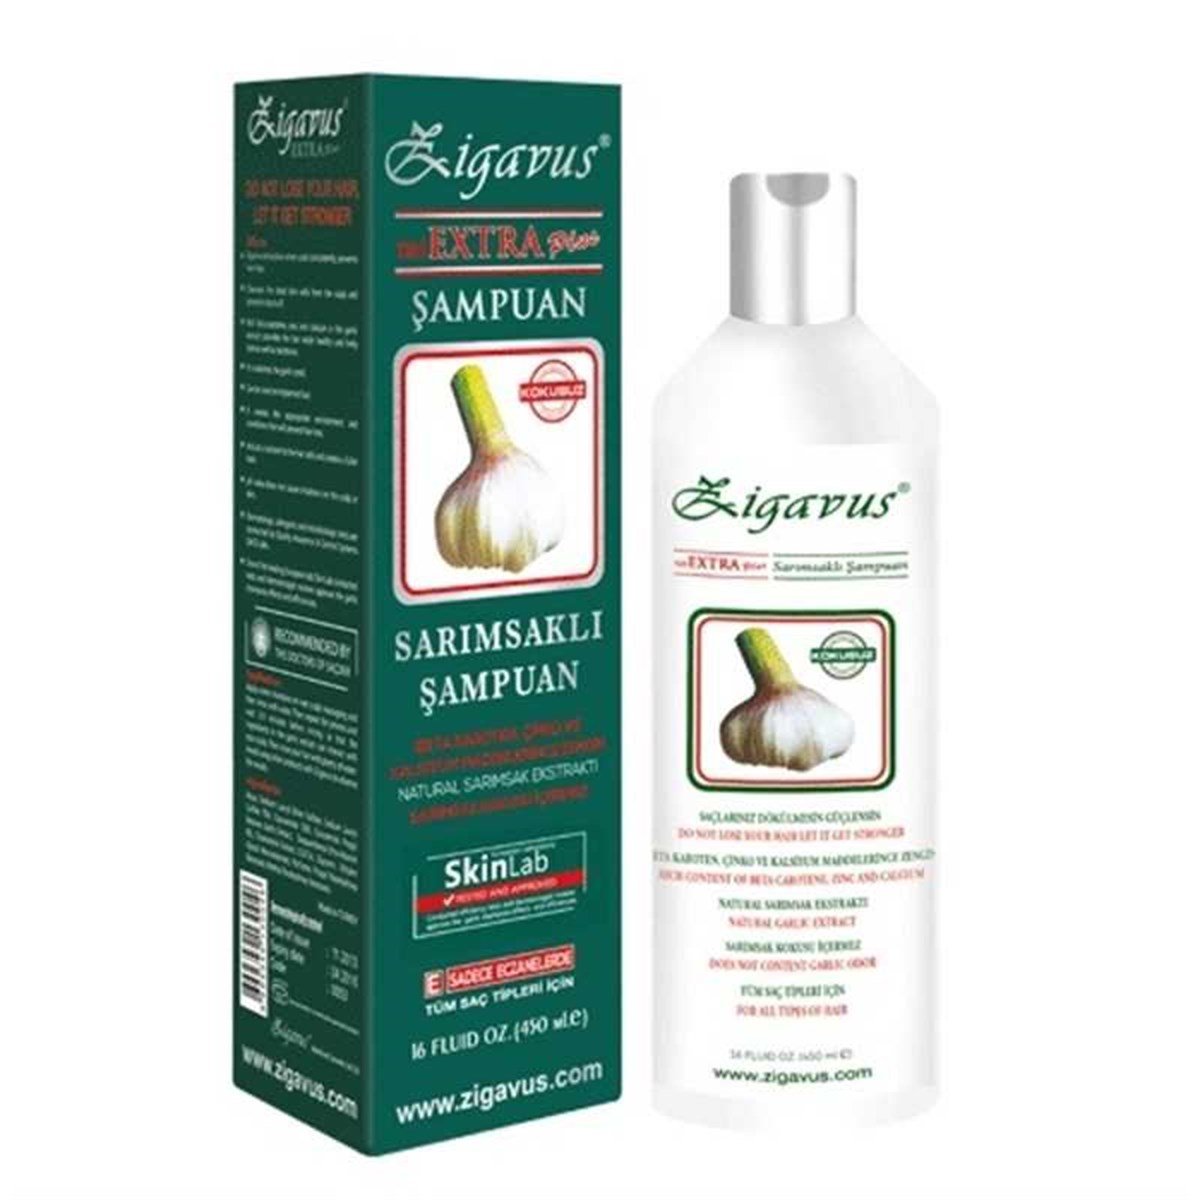 Zigavus Extra Plus Sarımsaklı Şampuan 250ml Fiyatları | Dermosiparis.com